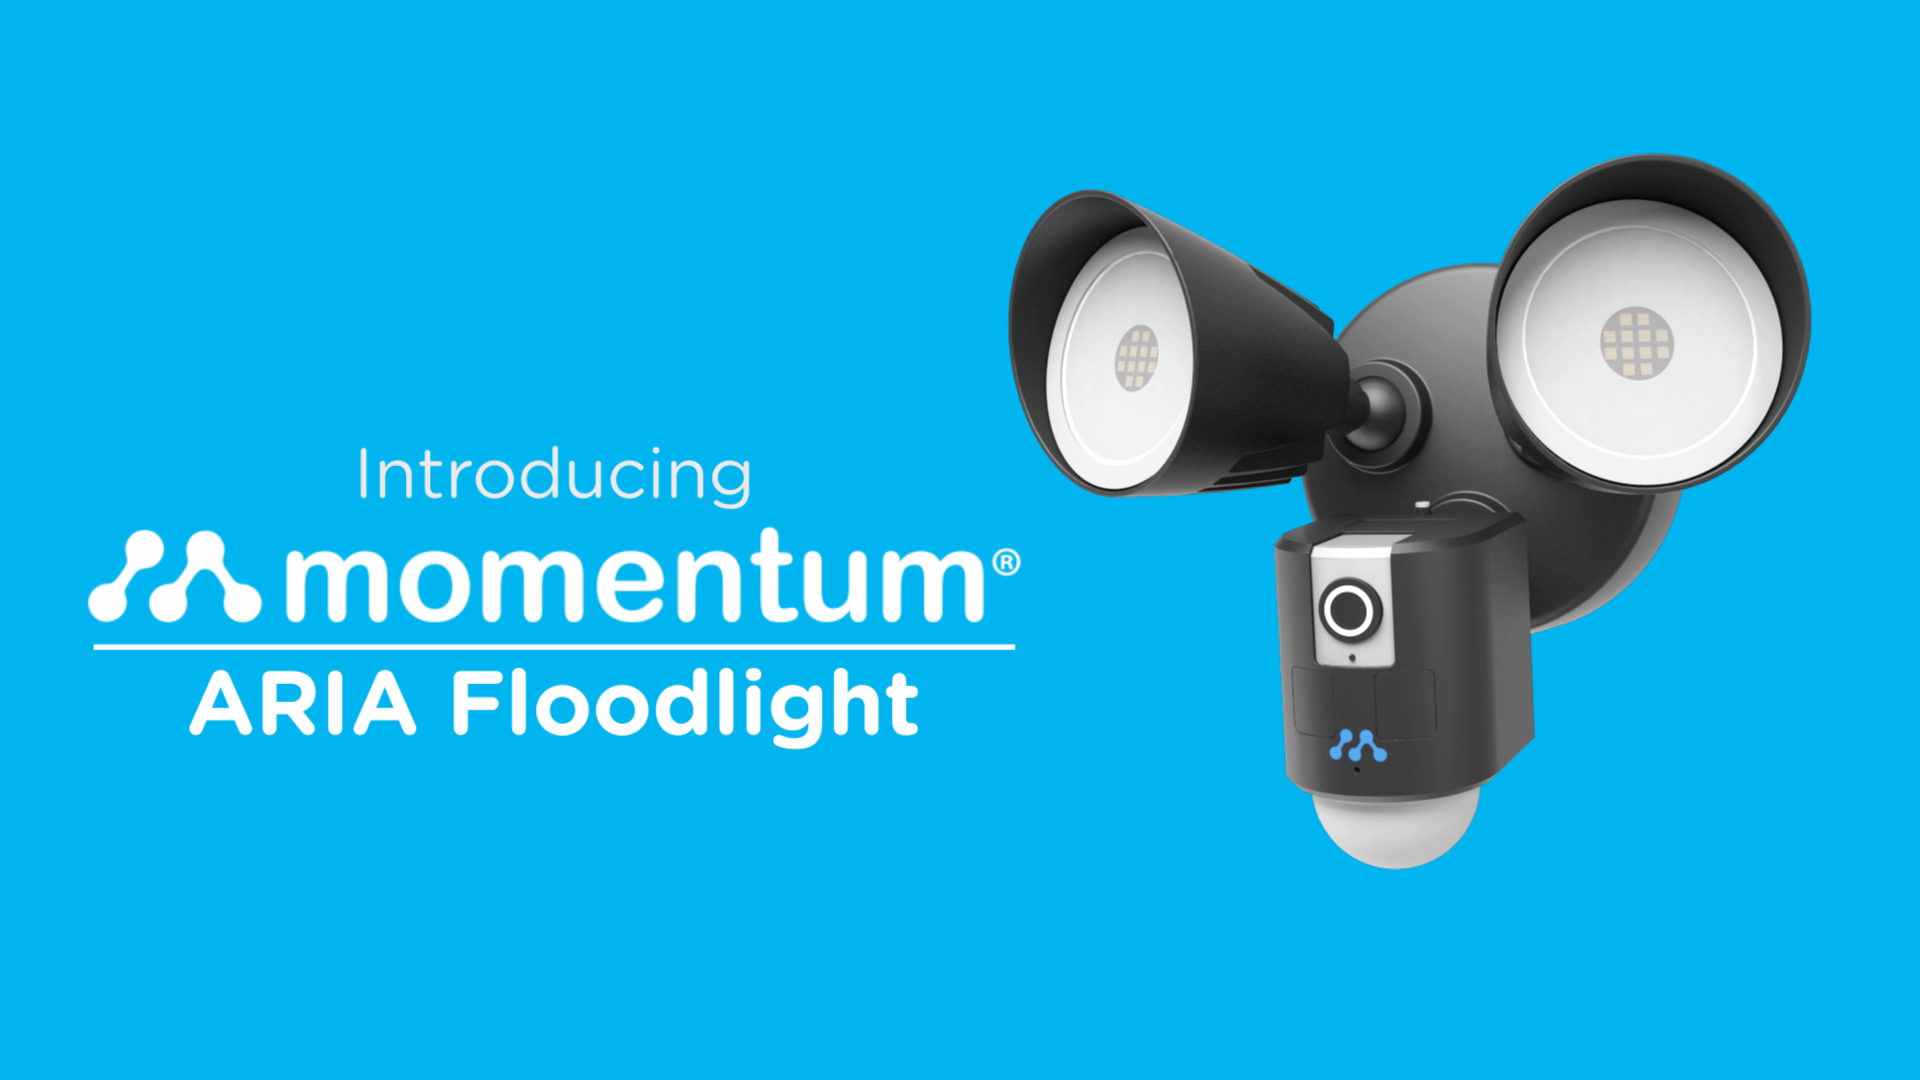 momentum aria outdoor floodlight camera